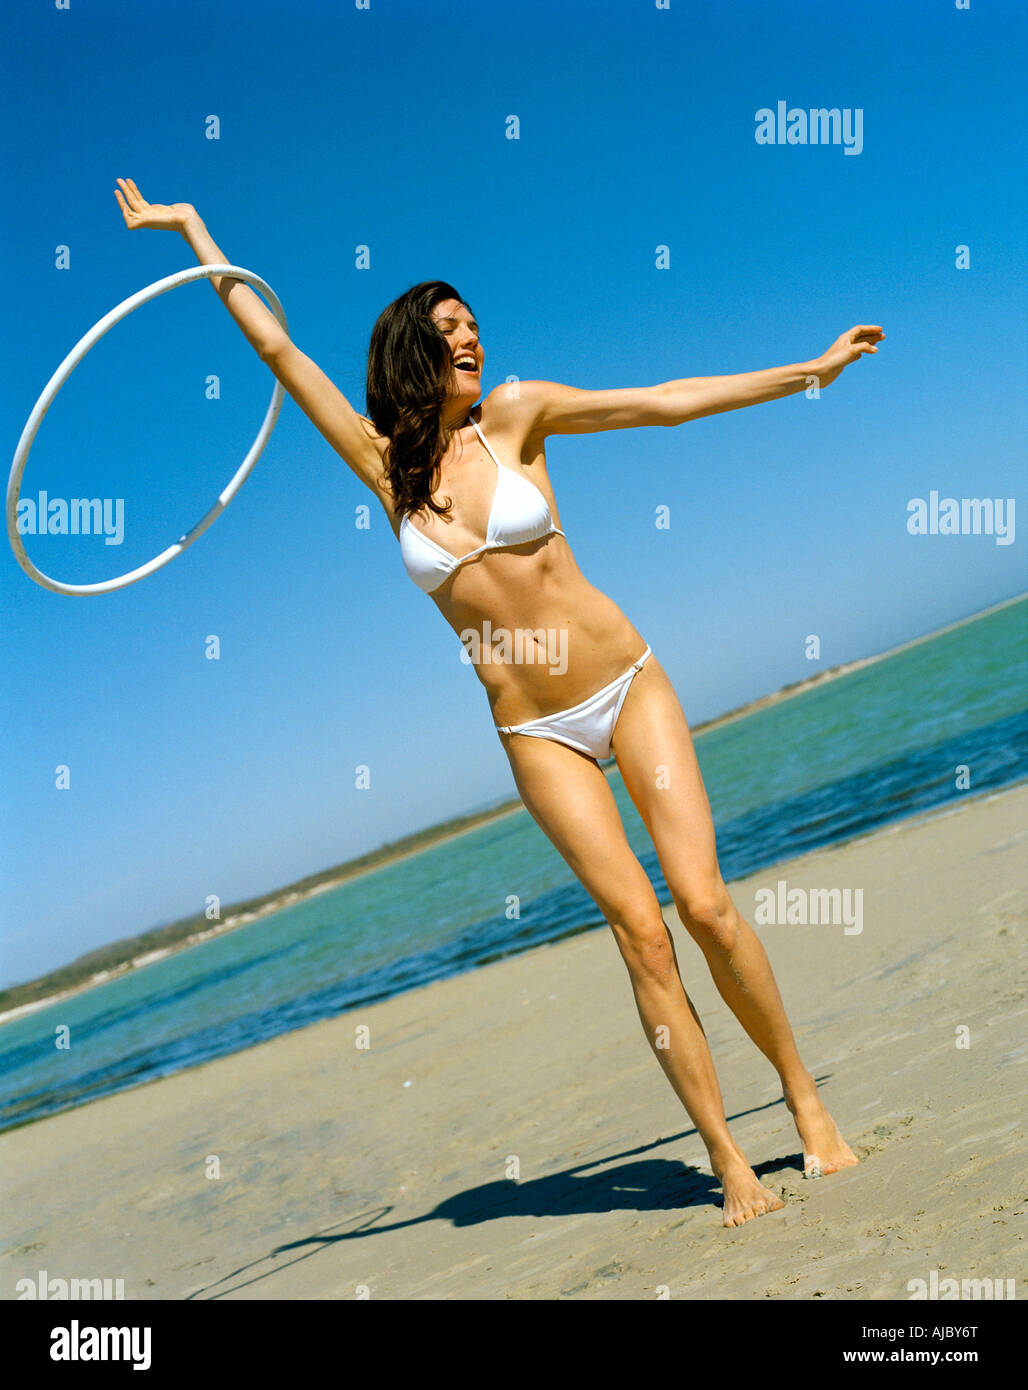 Portrait of a Woman in a Bikini on the Beach Stock Photo